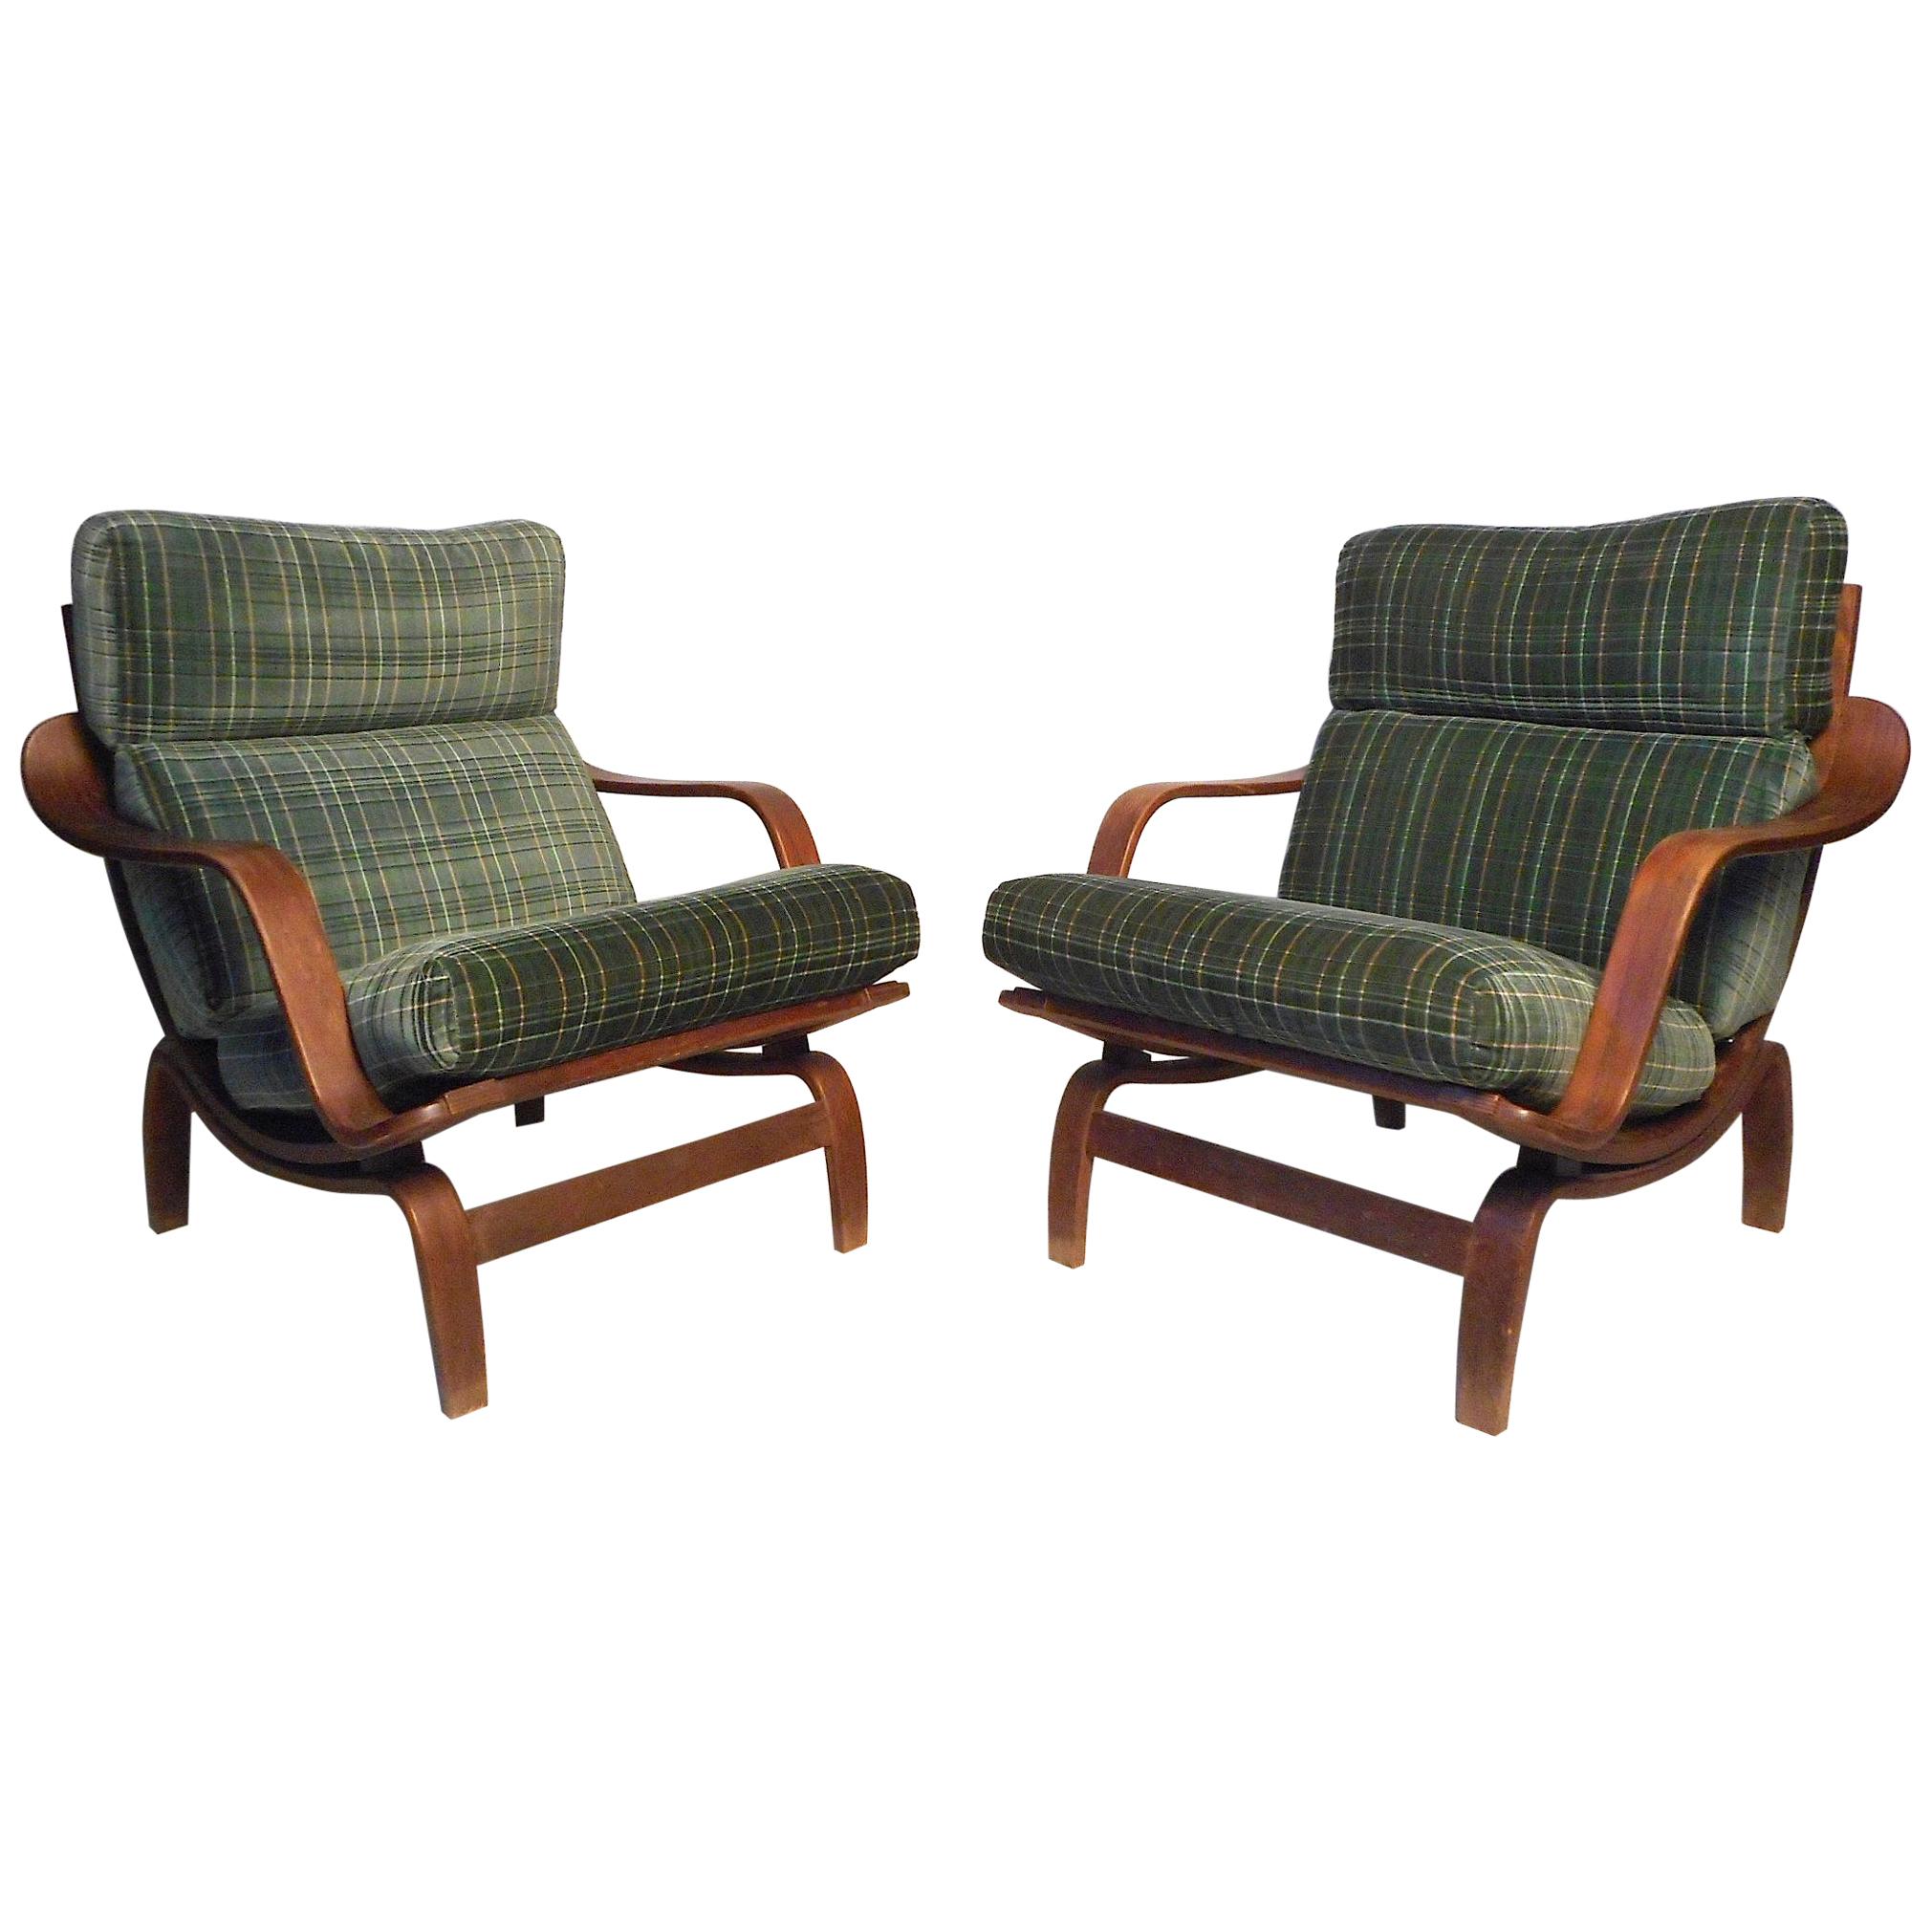 Charlton Orbit - For Sale on 1stDibs | charlton lounge chair